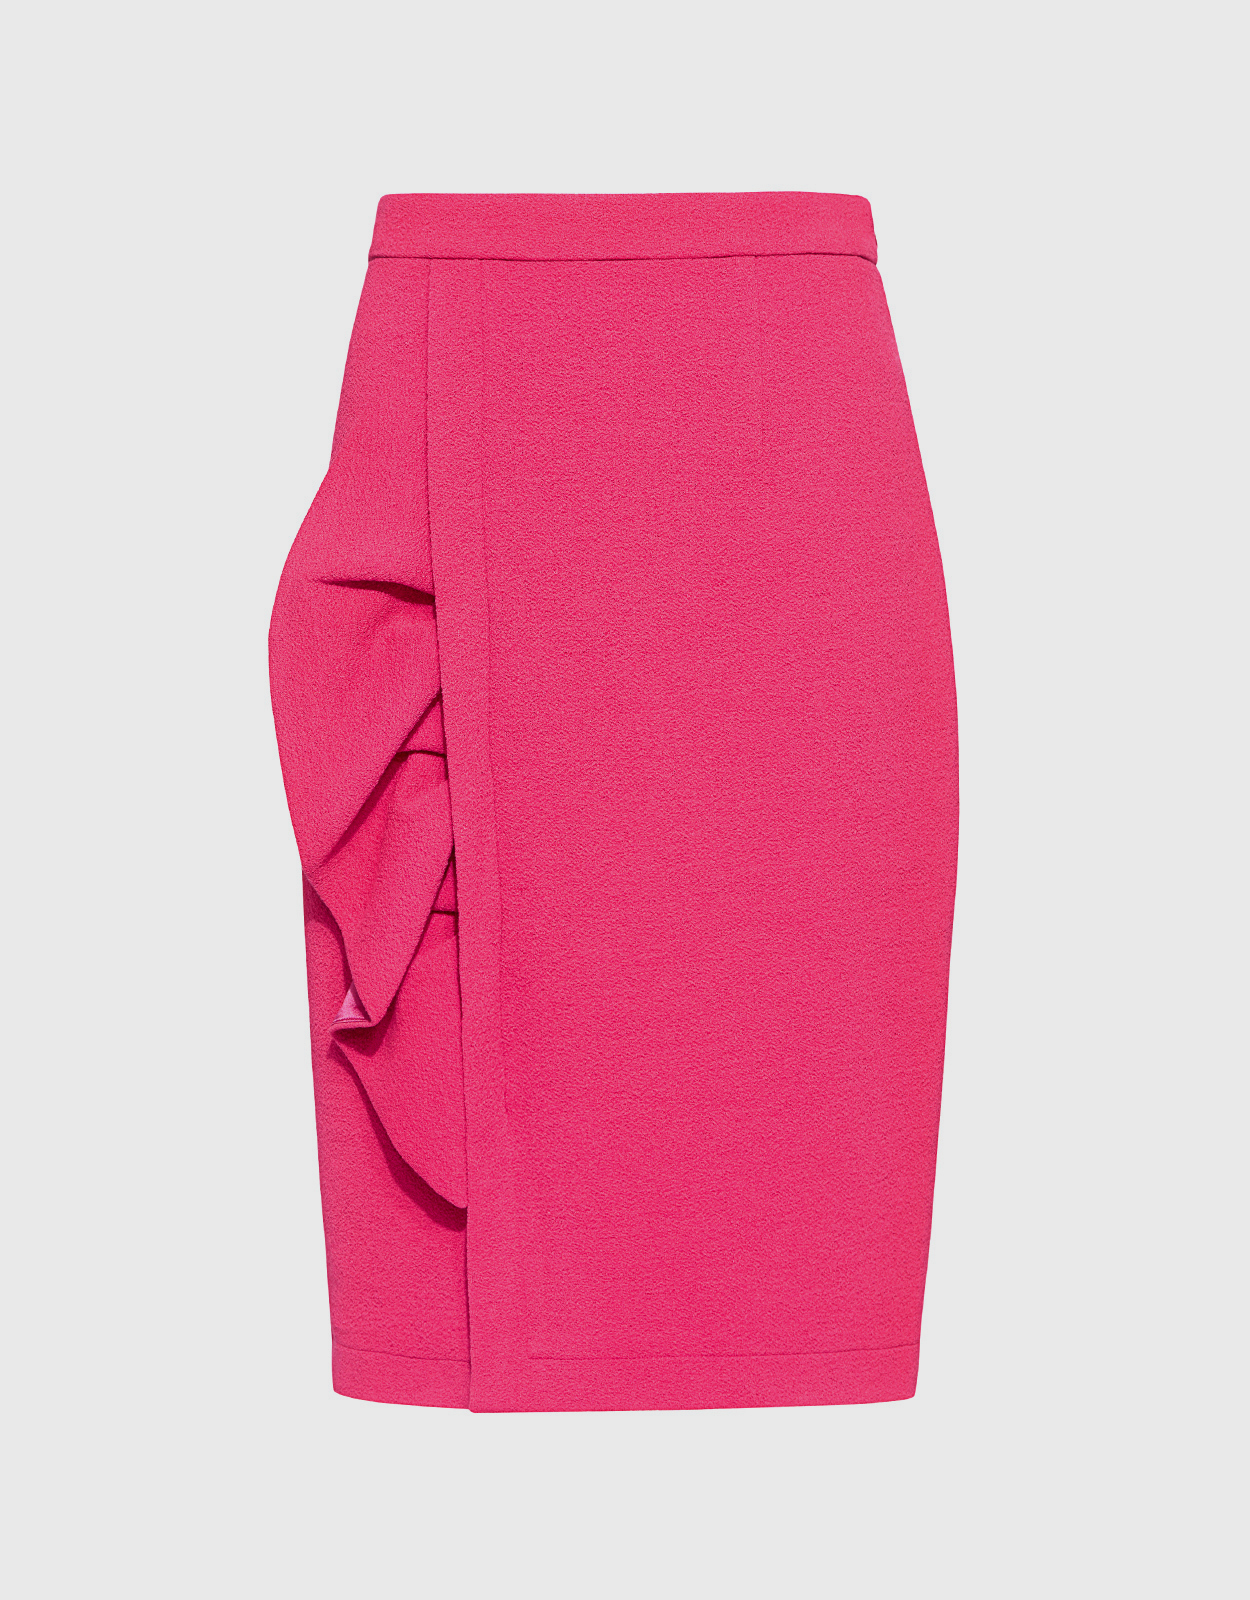 Penetration Brave Wizard Boutique Moschino Ruffle Side Pencil Skirt (Skirts,Knee Length) IFCHIC.COM